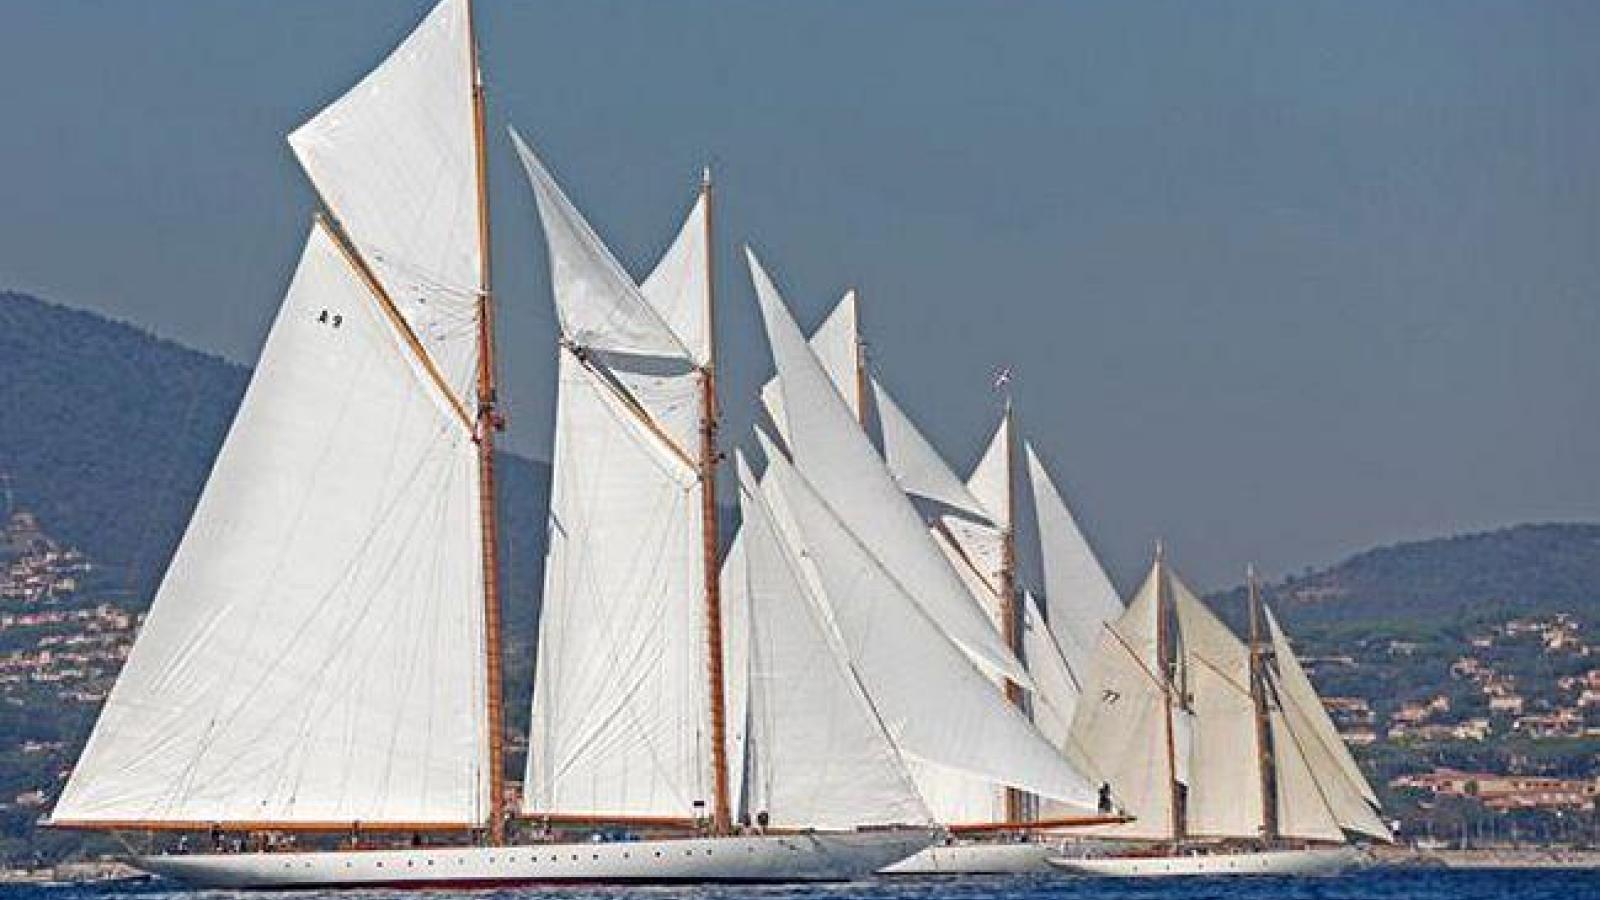 Saint Tropez sailing - a remarkable yachting event